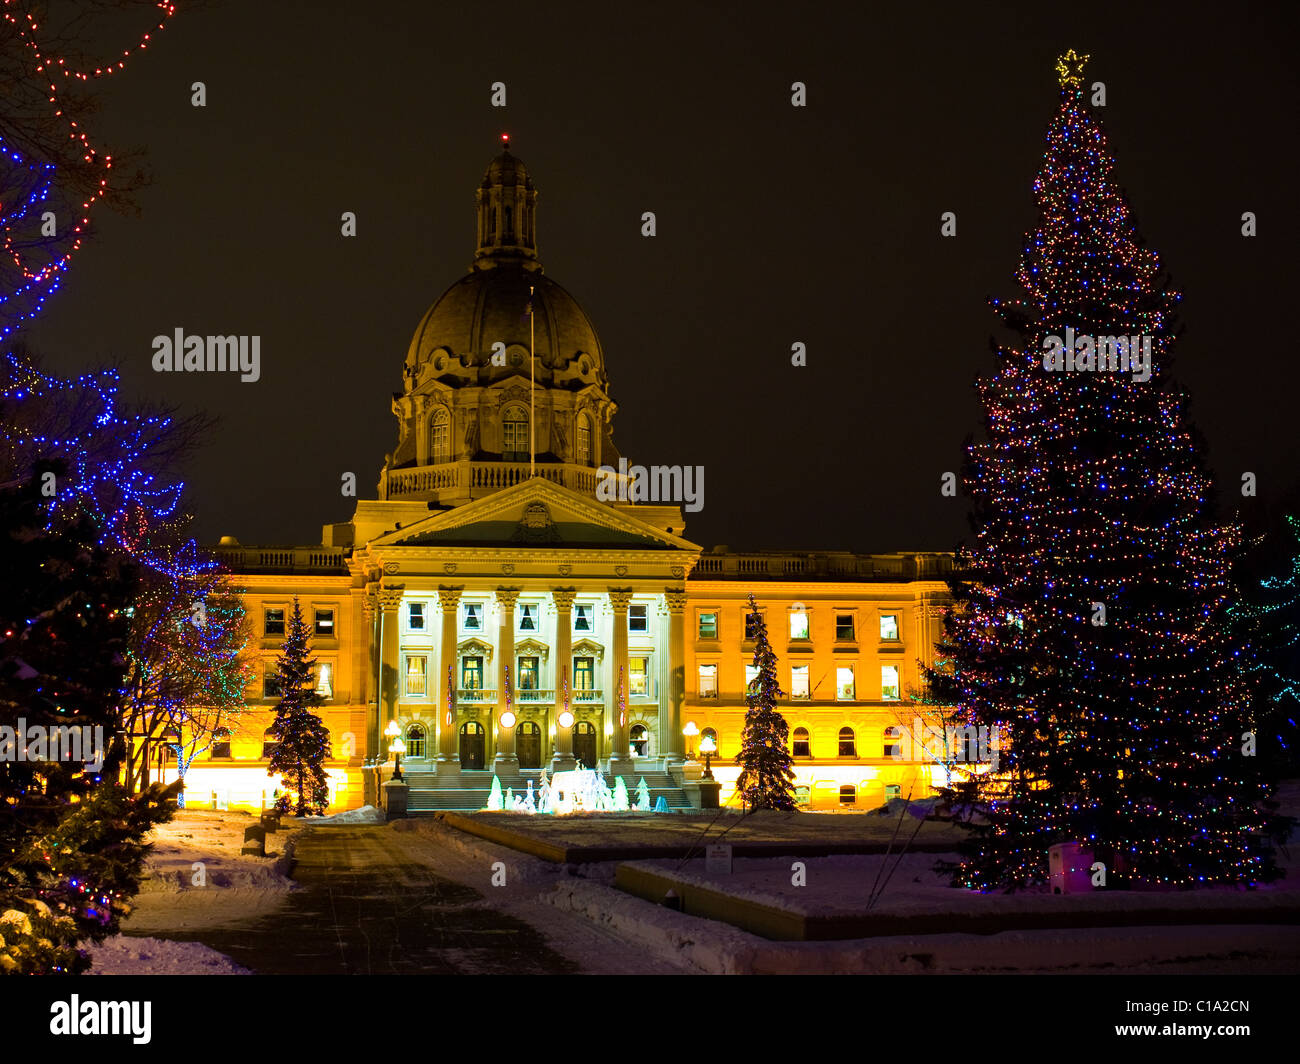 Winter and the Christmas season at the Alberta Legislature. Stock Photo